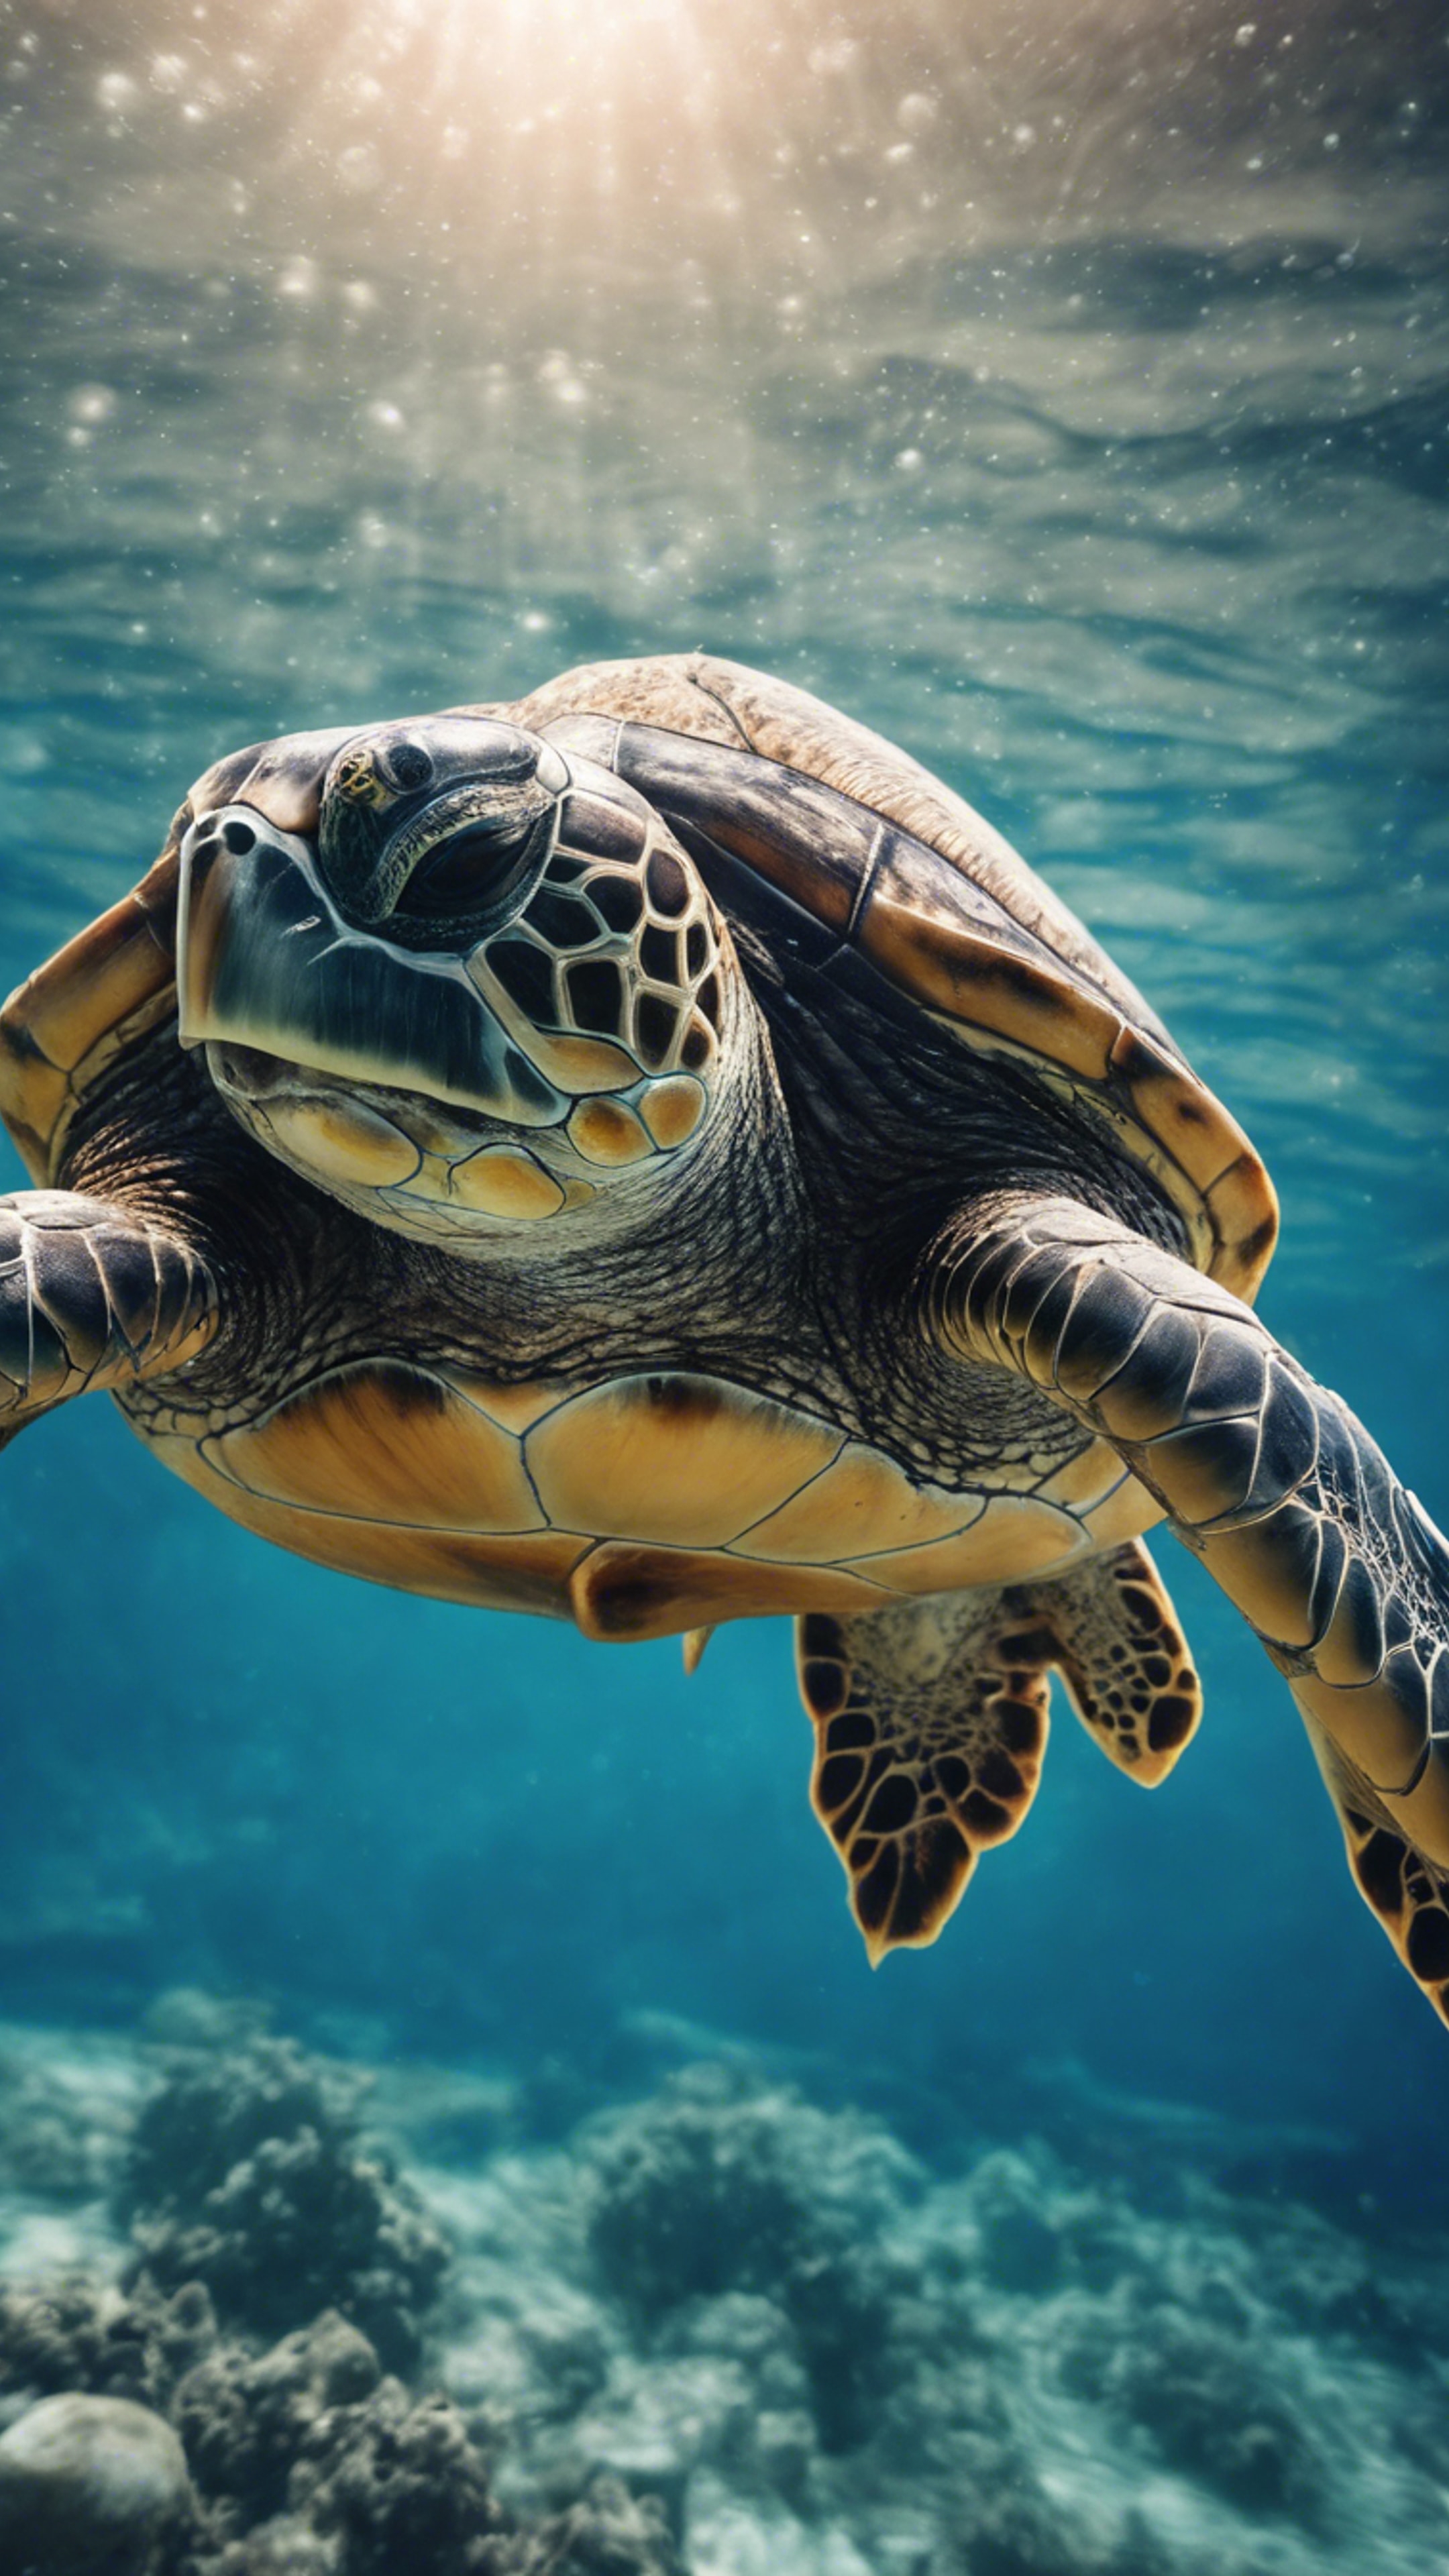 A sea turtle diving deep into the blue ocean, leaving a trail of bubbles in its wake. Sfondo[b719e57dee3e4481a20a]